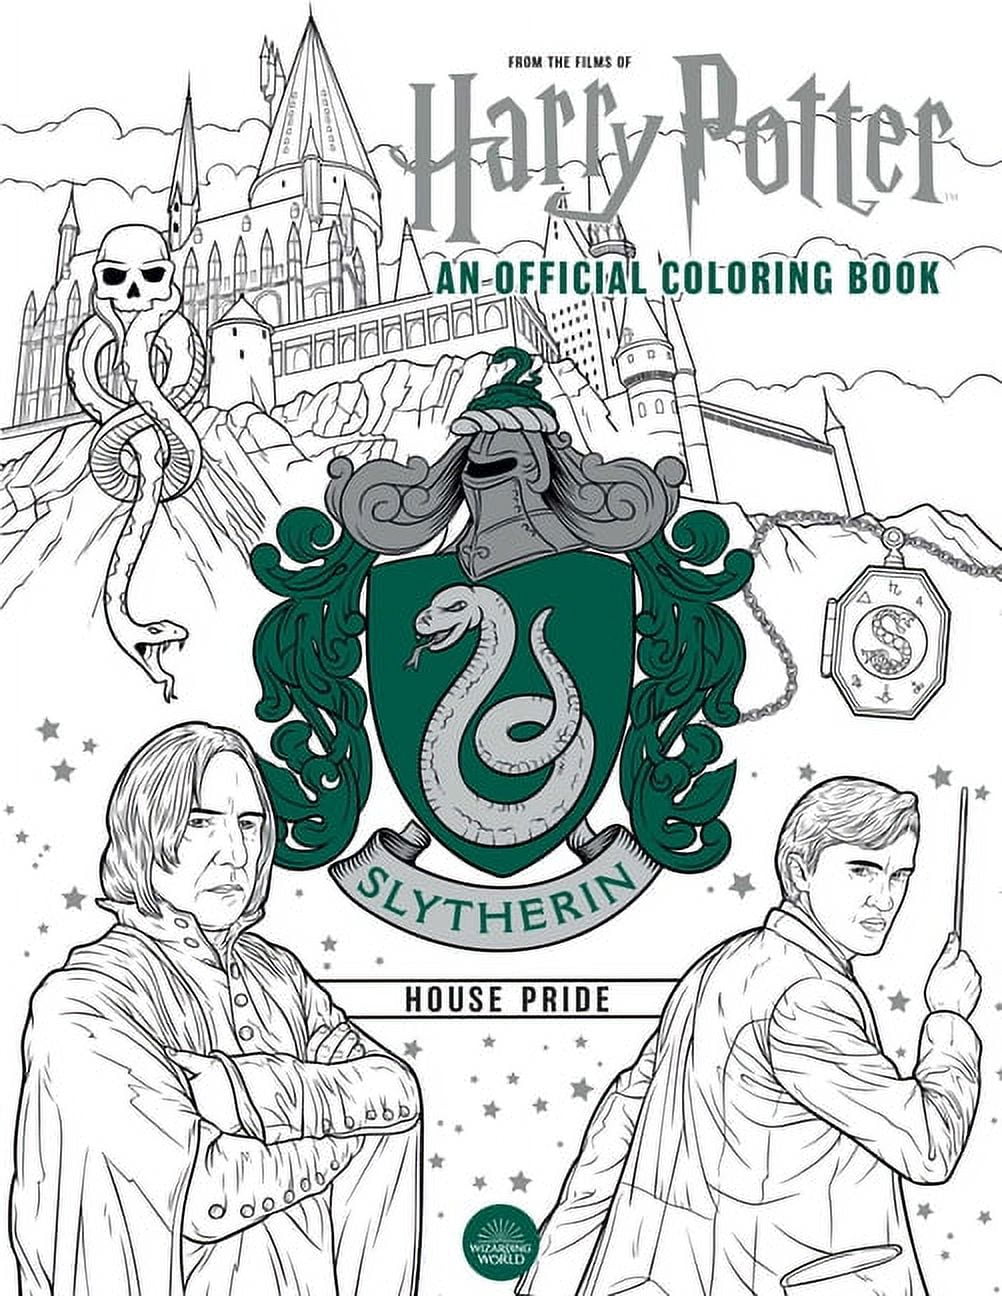 9 Slytherin Gifts for Harry Potter Fans – Feminist Books for Kids